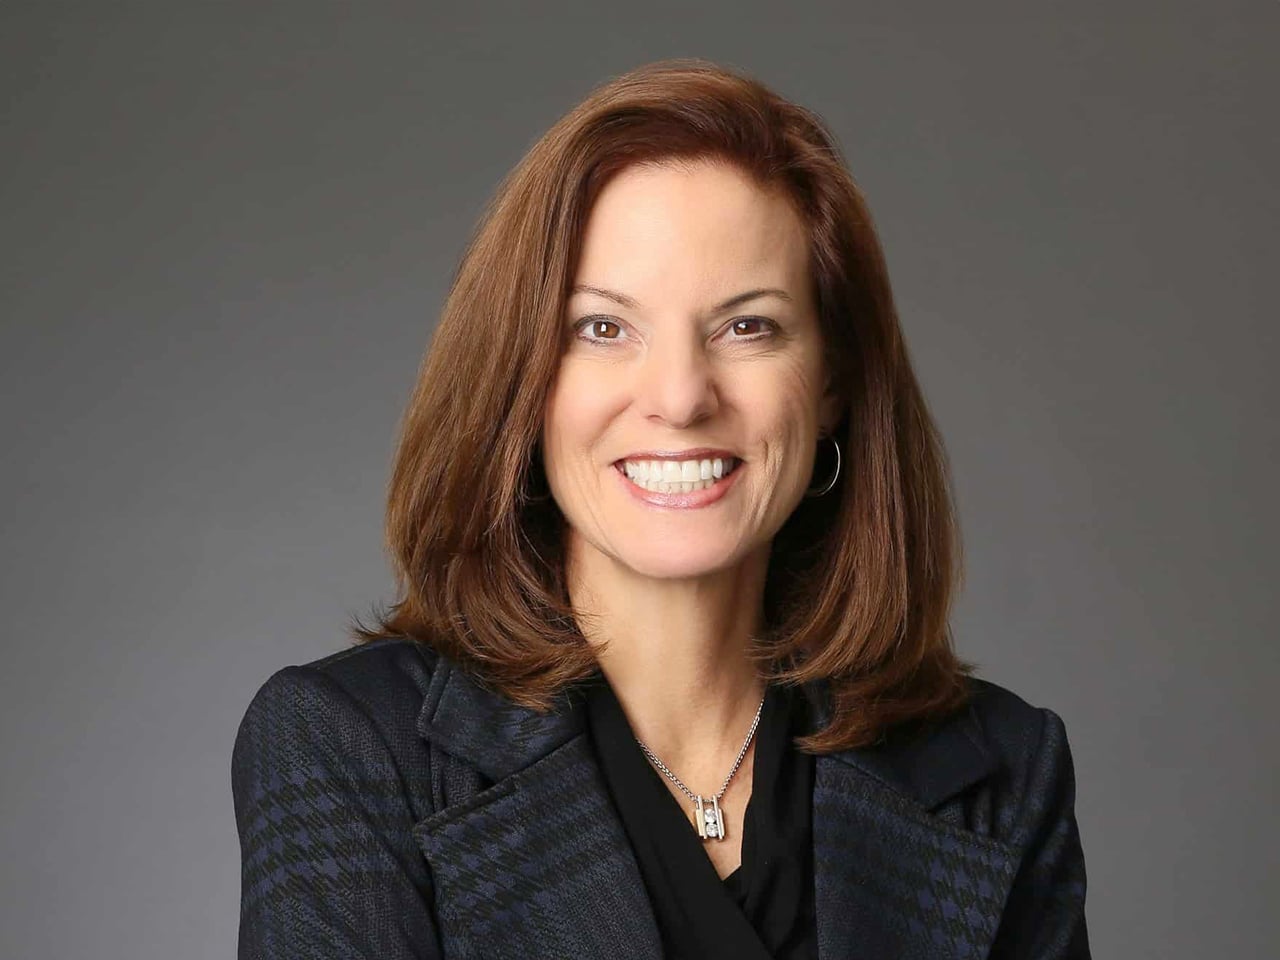 Lynn Blake, CFO of Nuwellis, Inc.